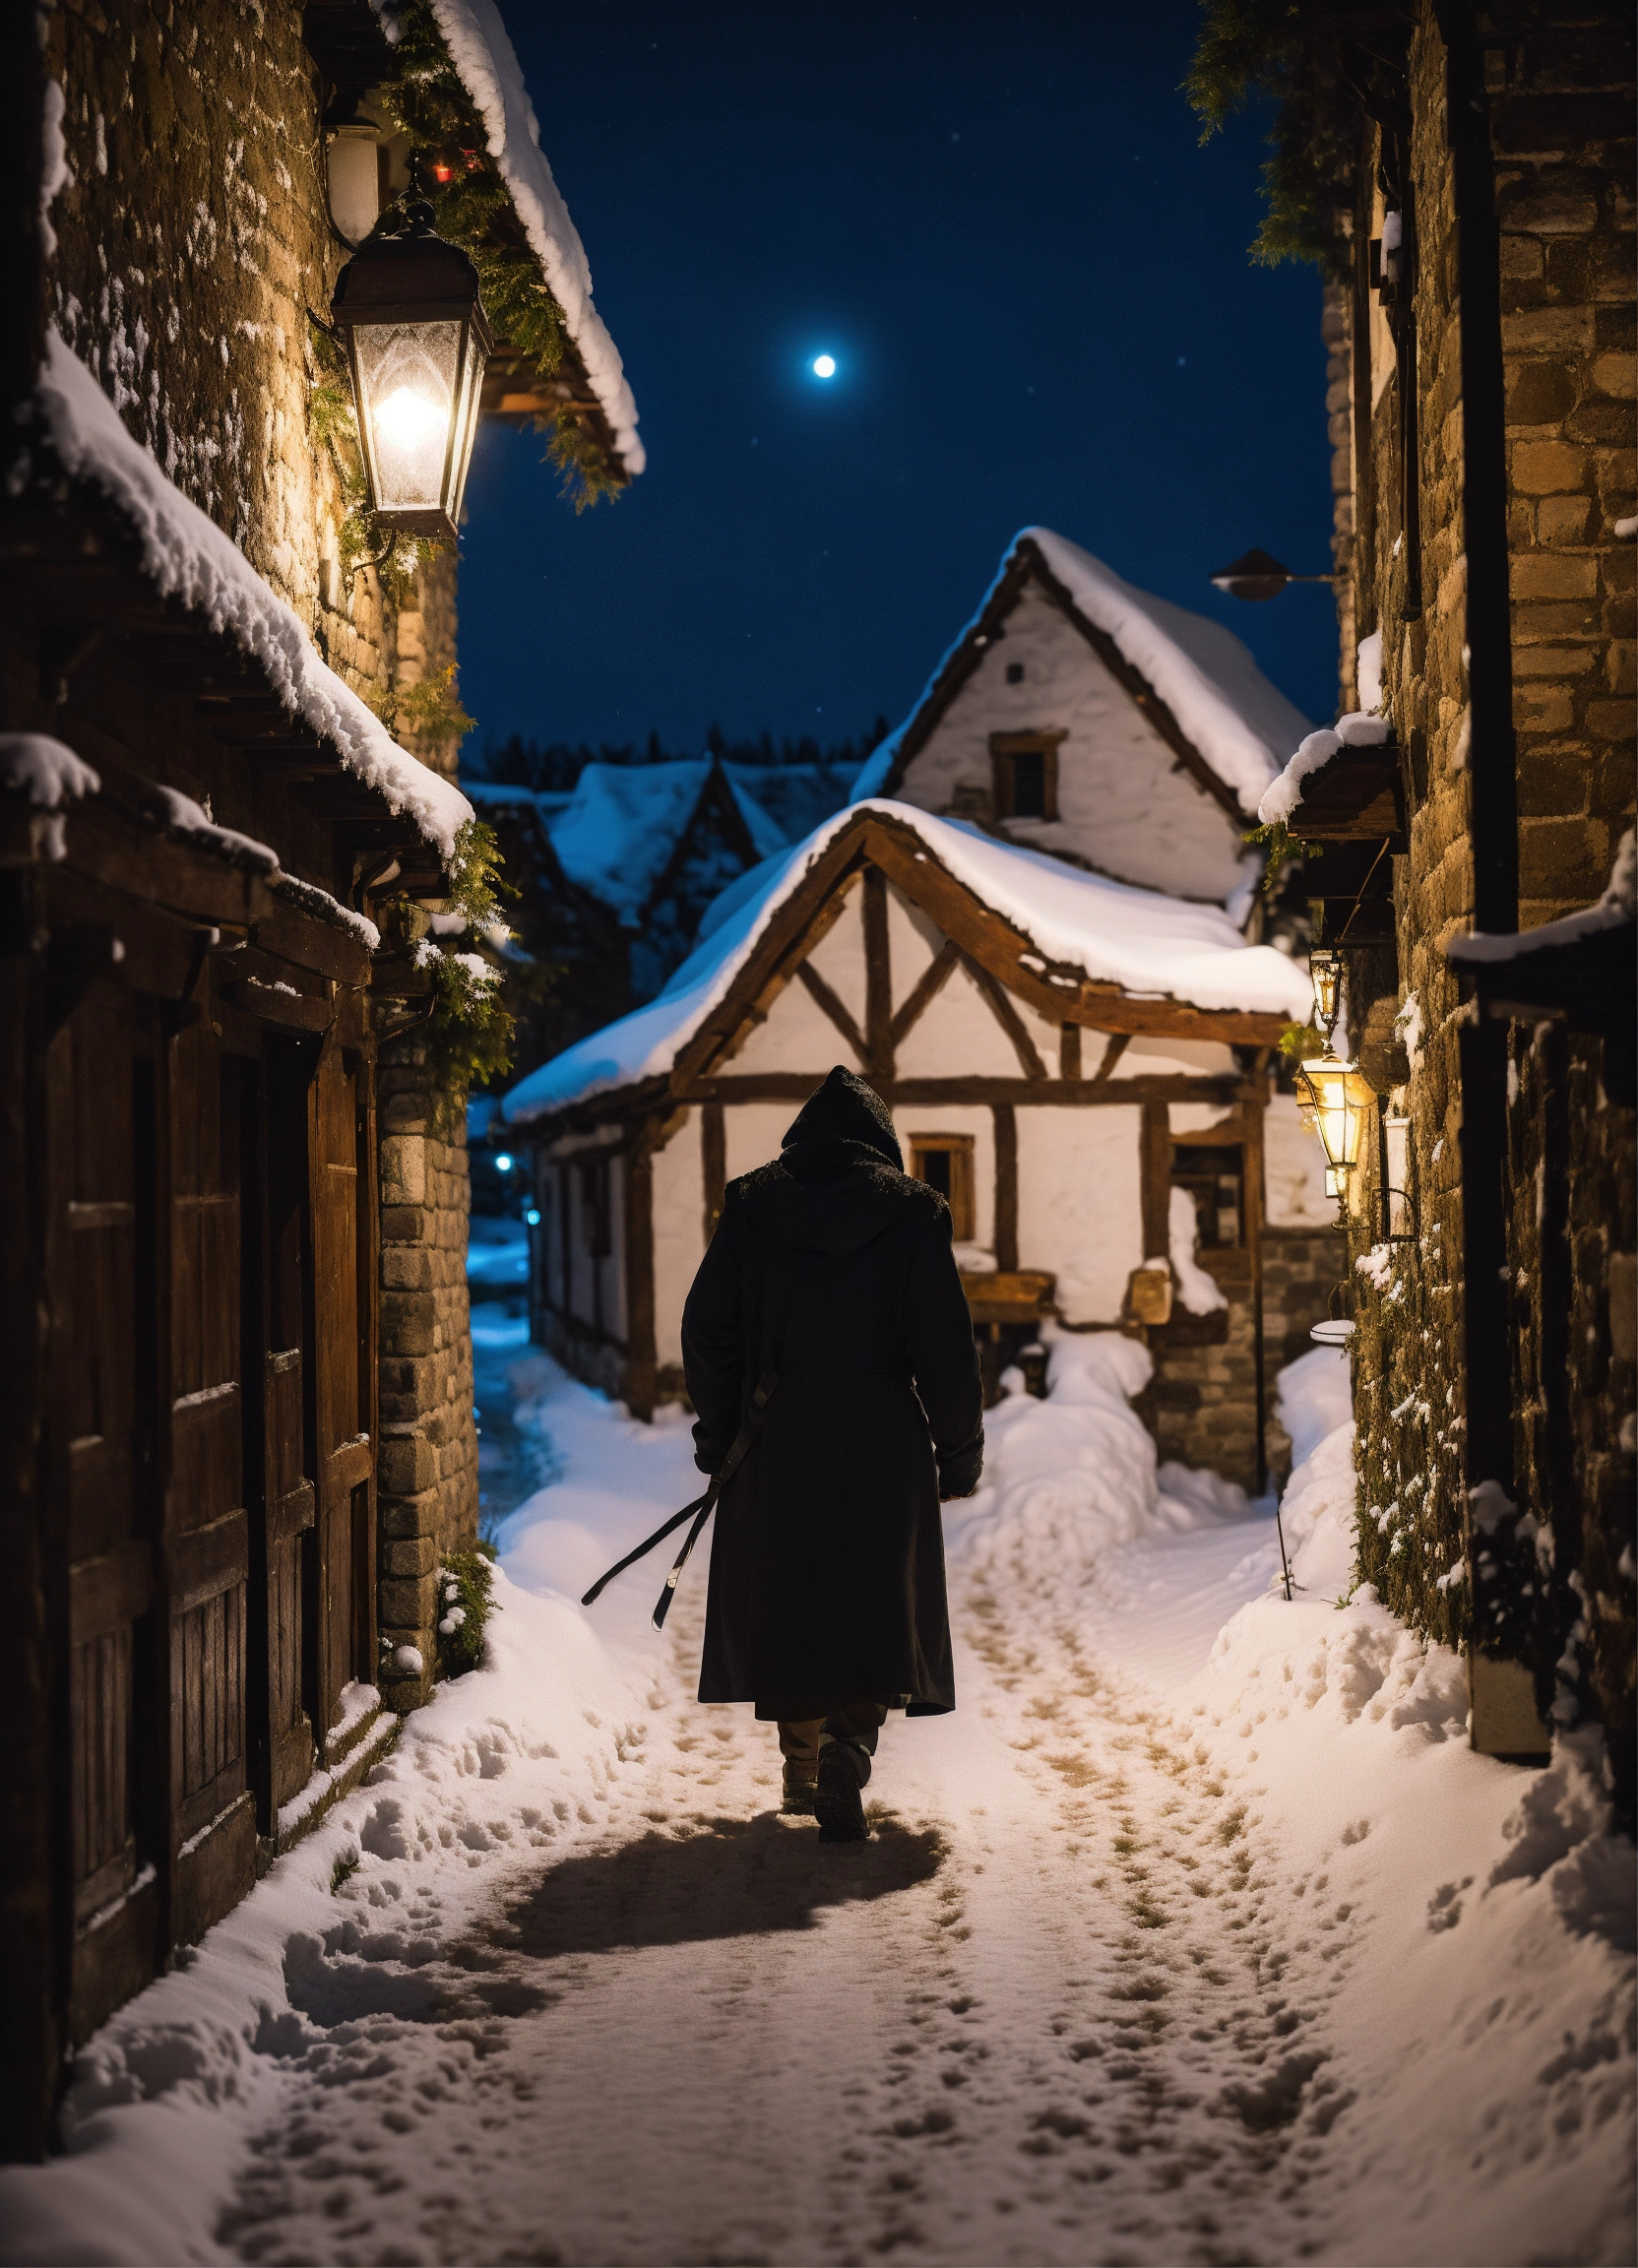 The Enchanted Winter Village Wallpaper 4K